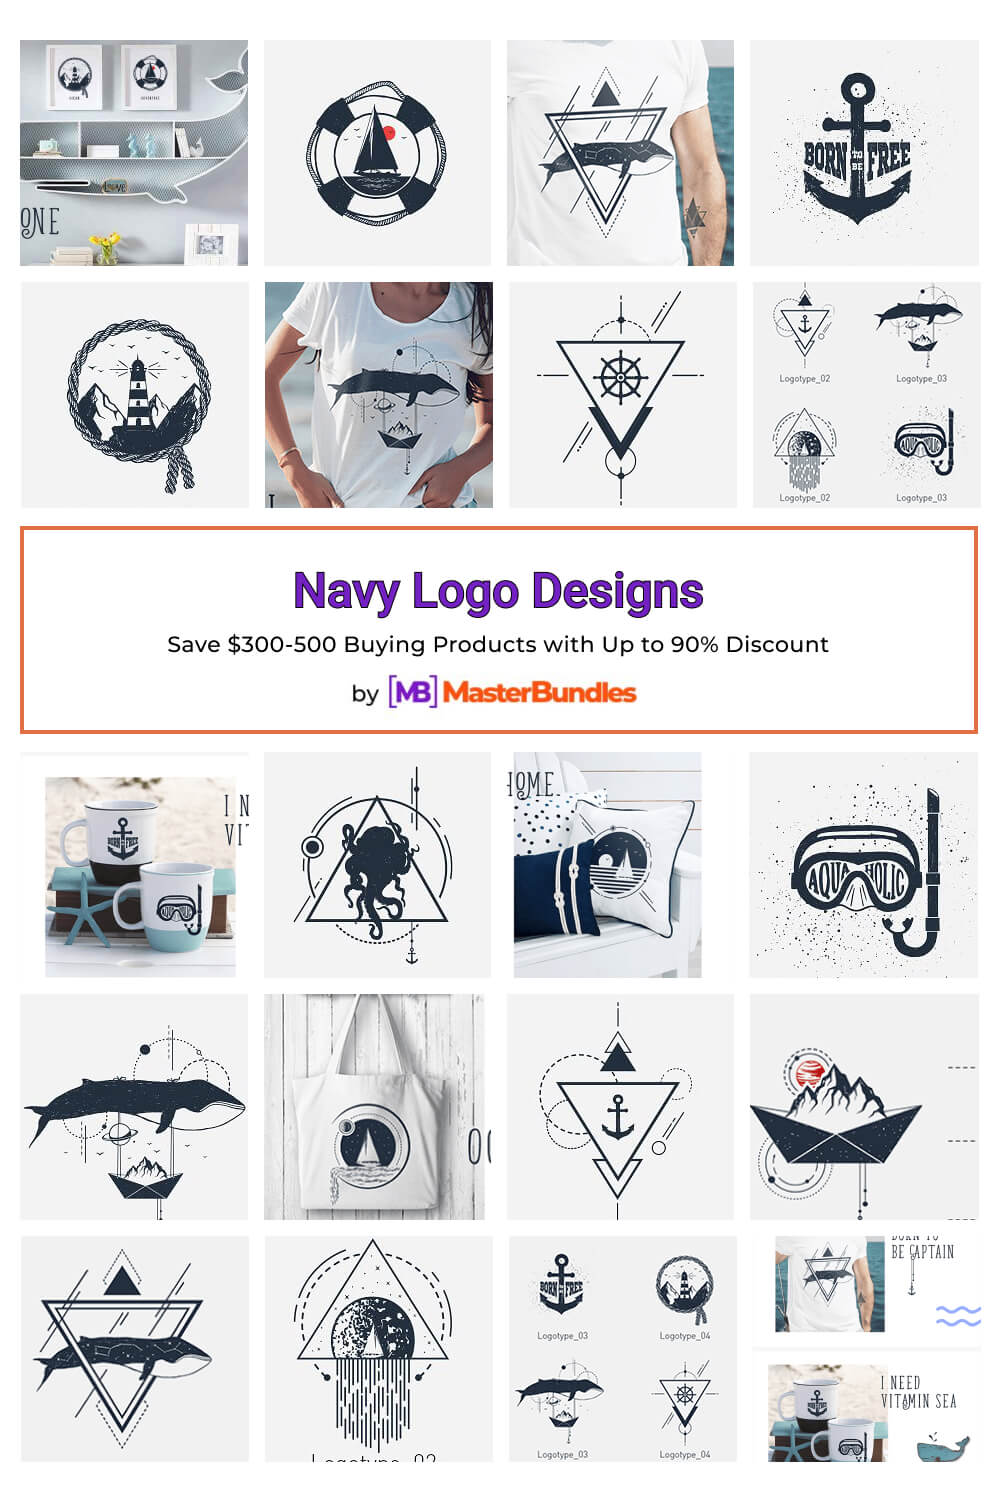 navy logo designs pinterest image.